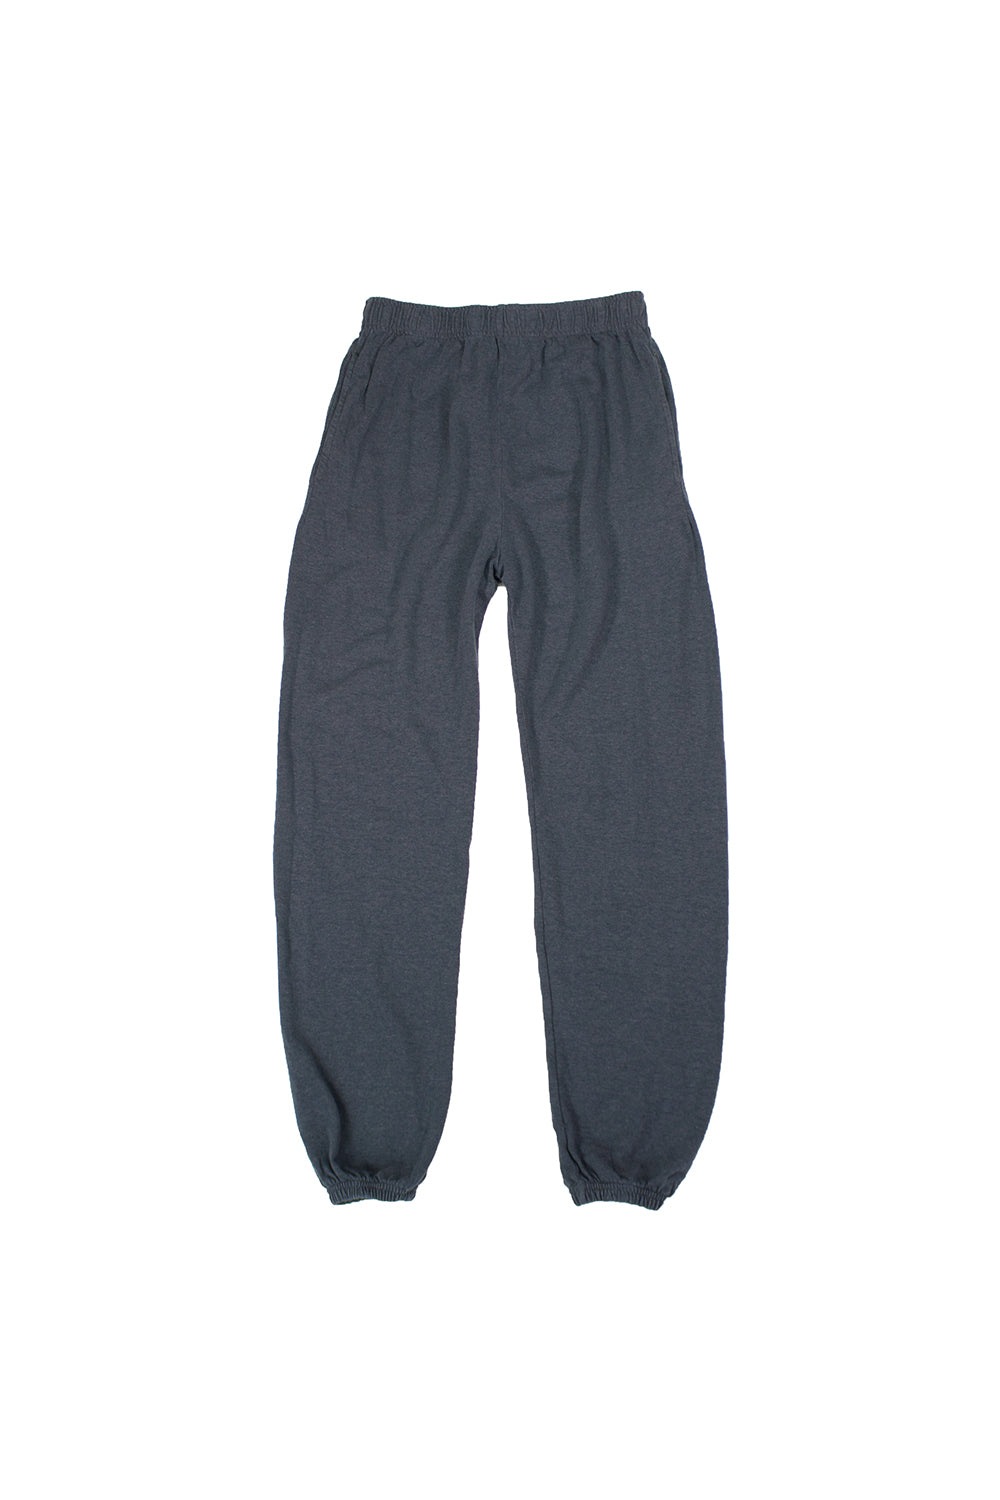 Alaska Hemp Wool Sweatpant | Jungmaven Hemp Clothing & Accessories / Color: Diesel Gray